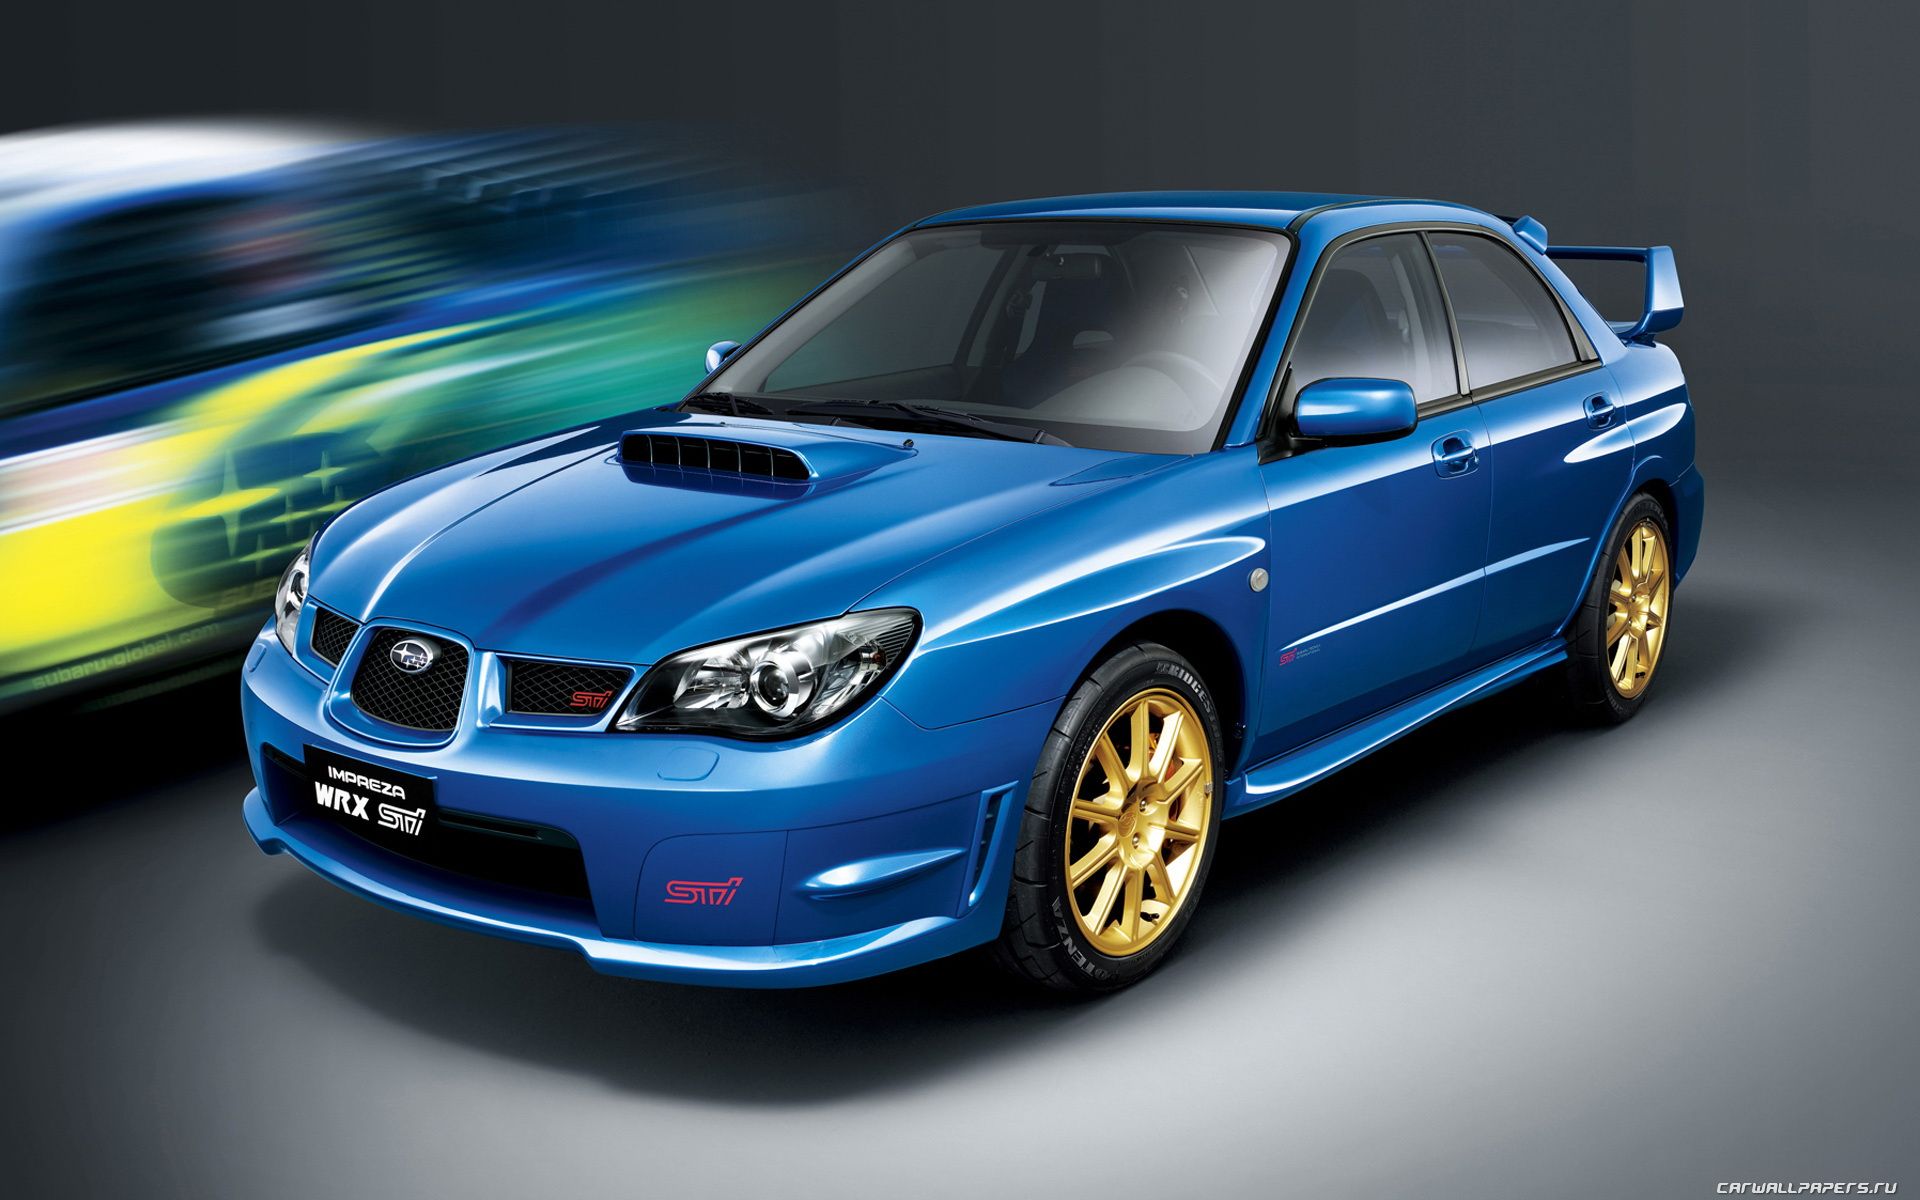 Car wallpapers - Subaru Impreza WRX STI - 2005